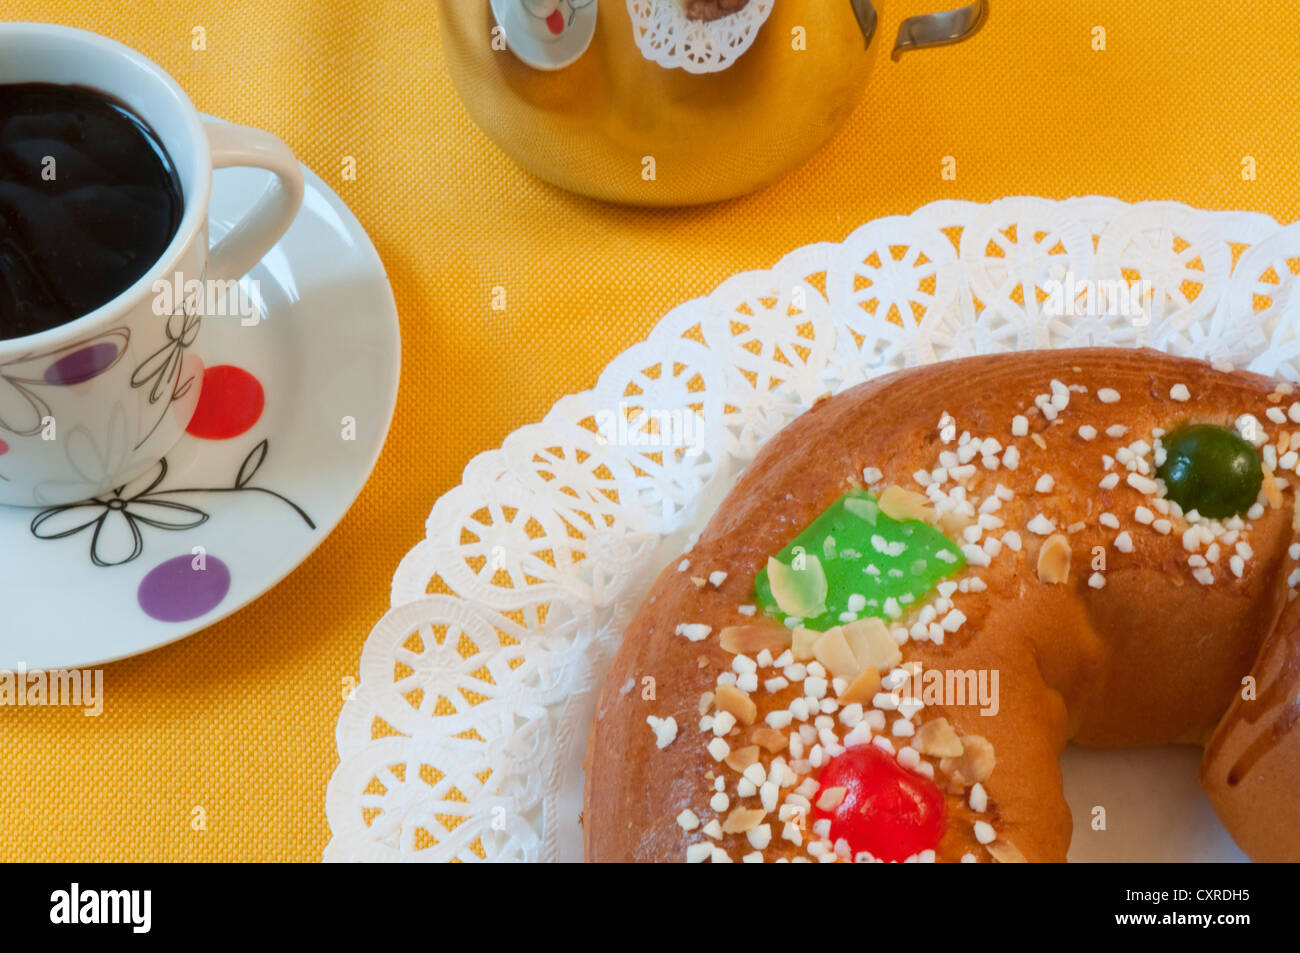 Roscon de Reyes, typical Spanish Christmas cake. Spain. Stock Photo